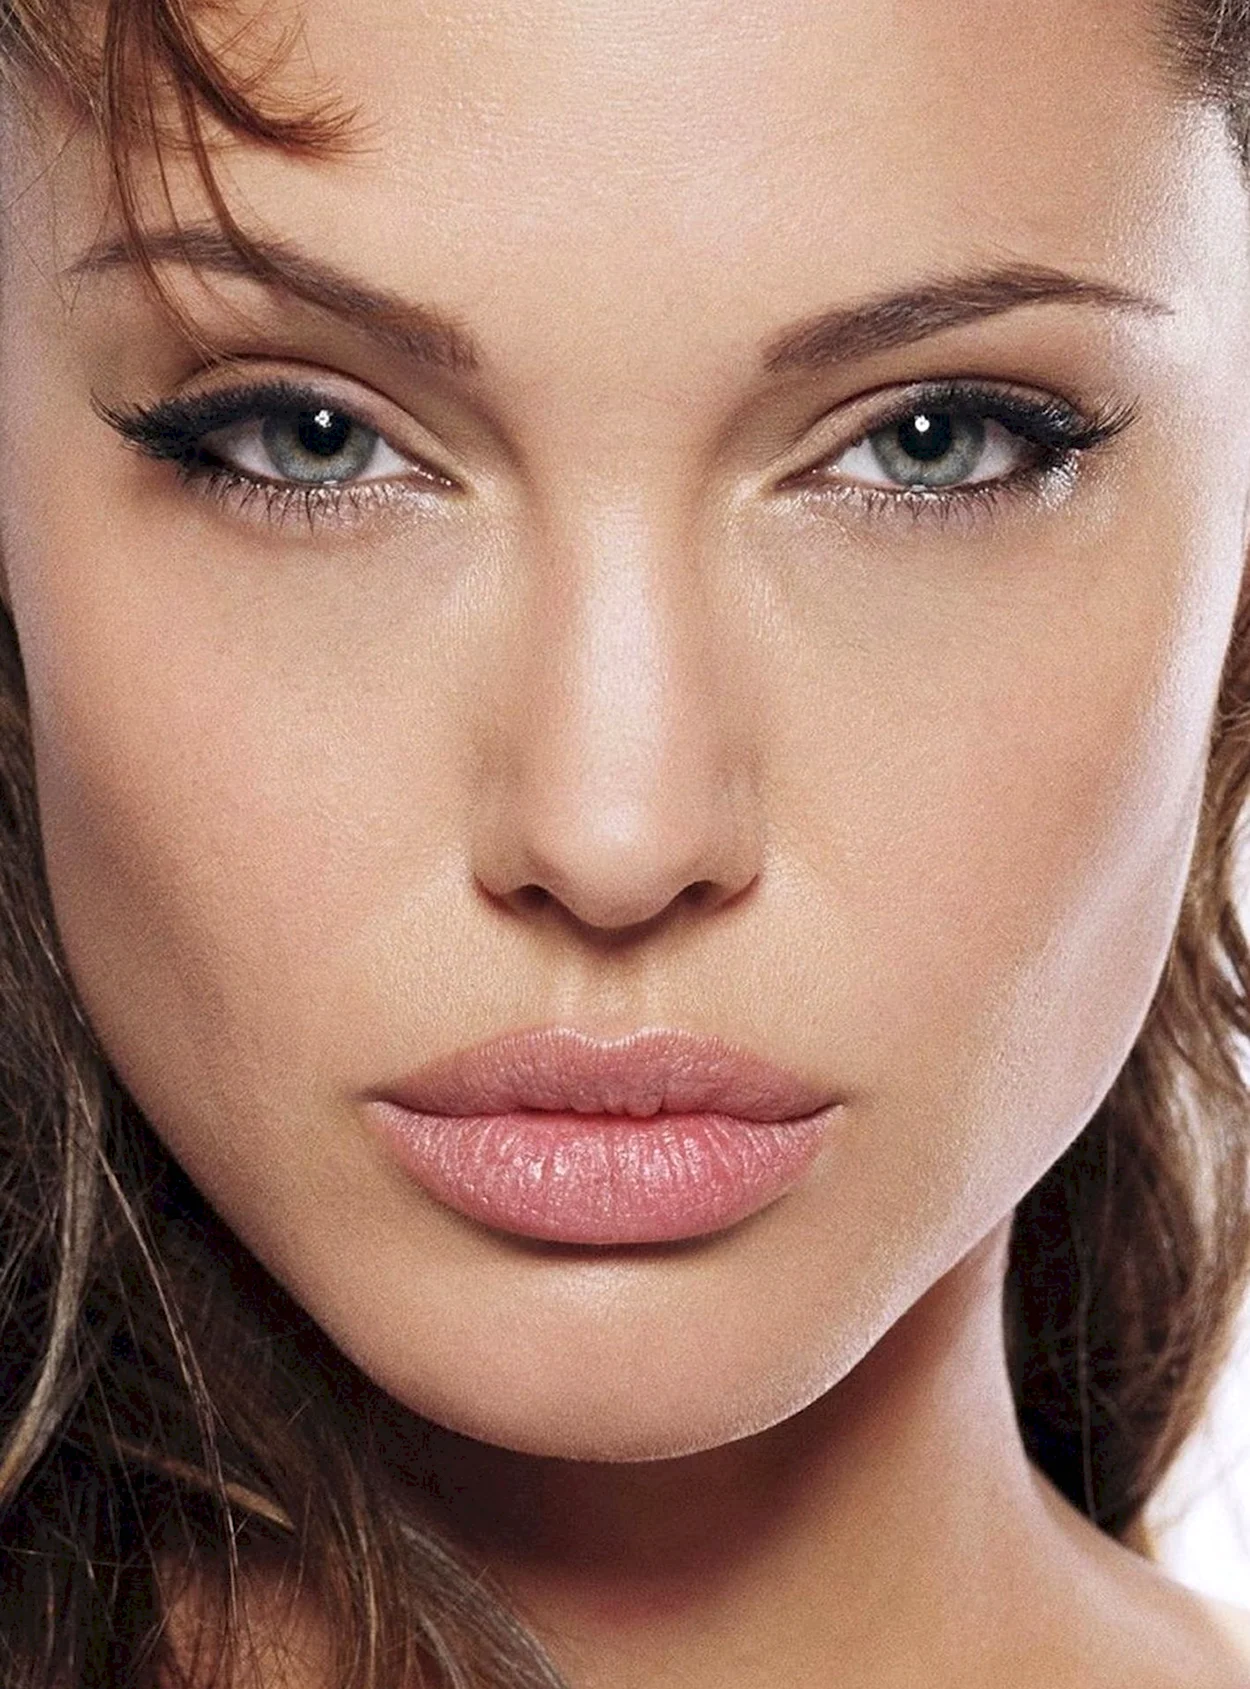 Анджелина Джоли анфас. Красивая девушка